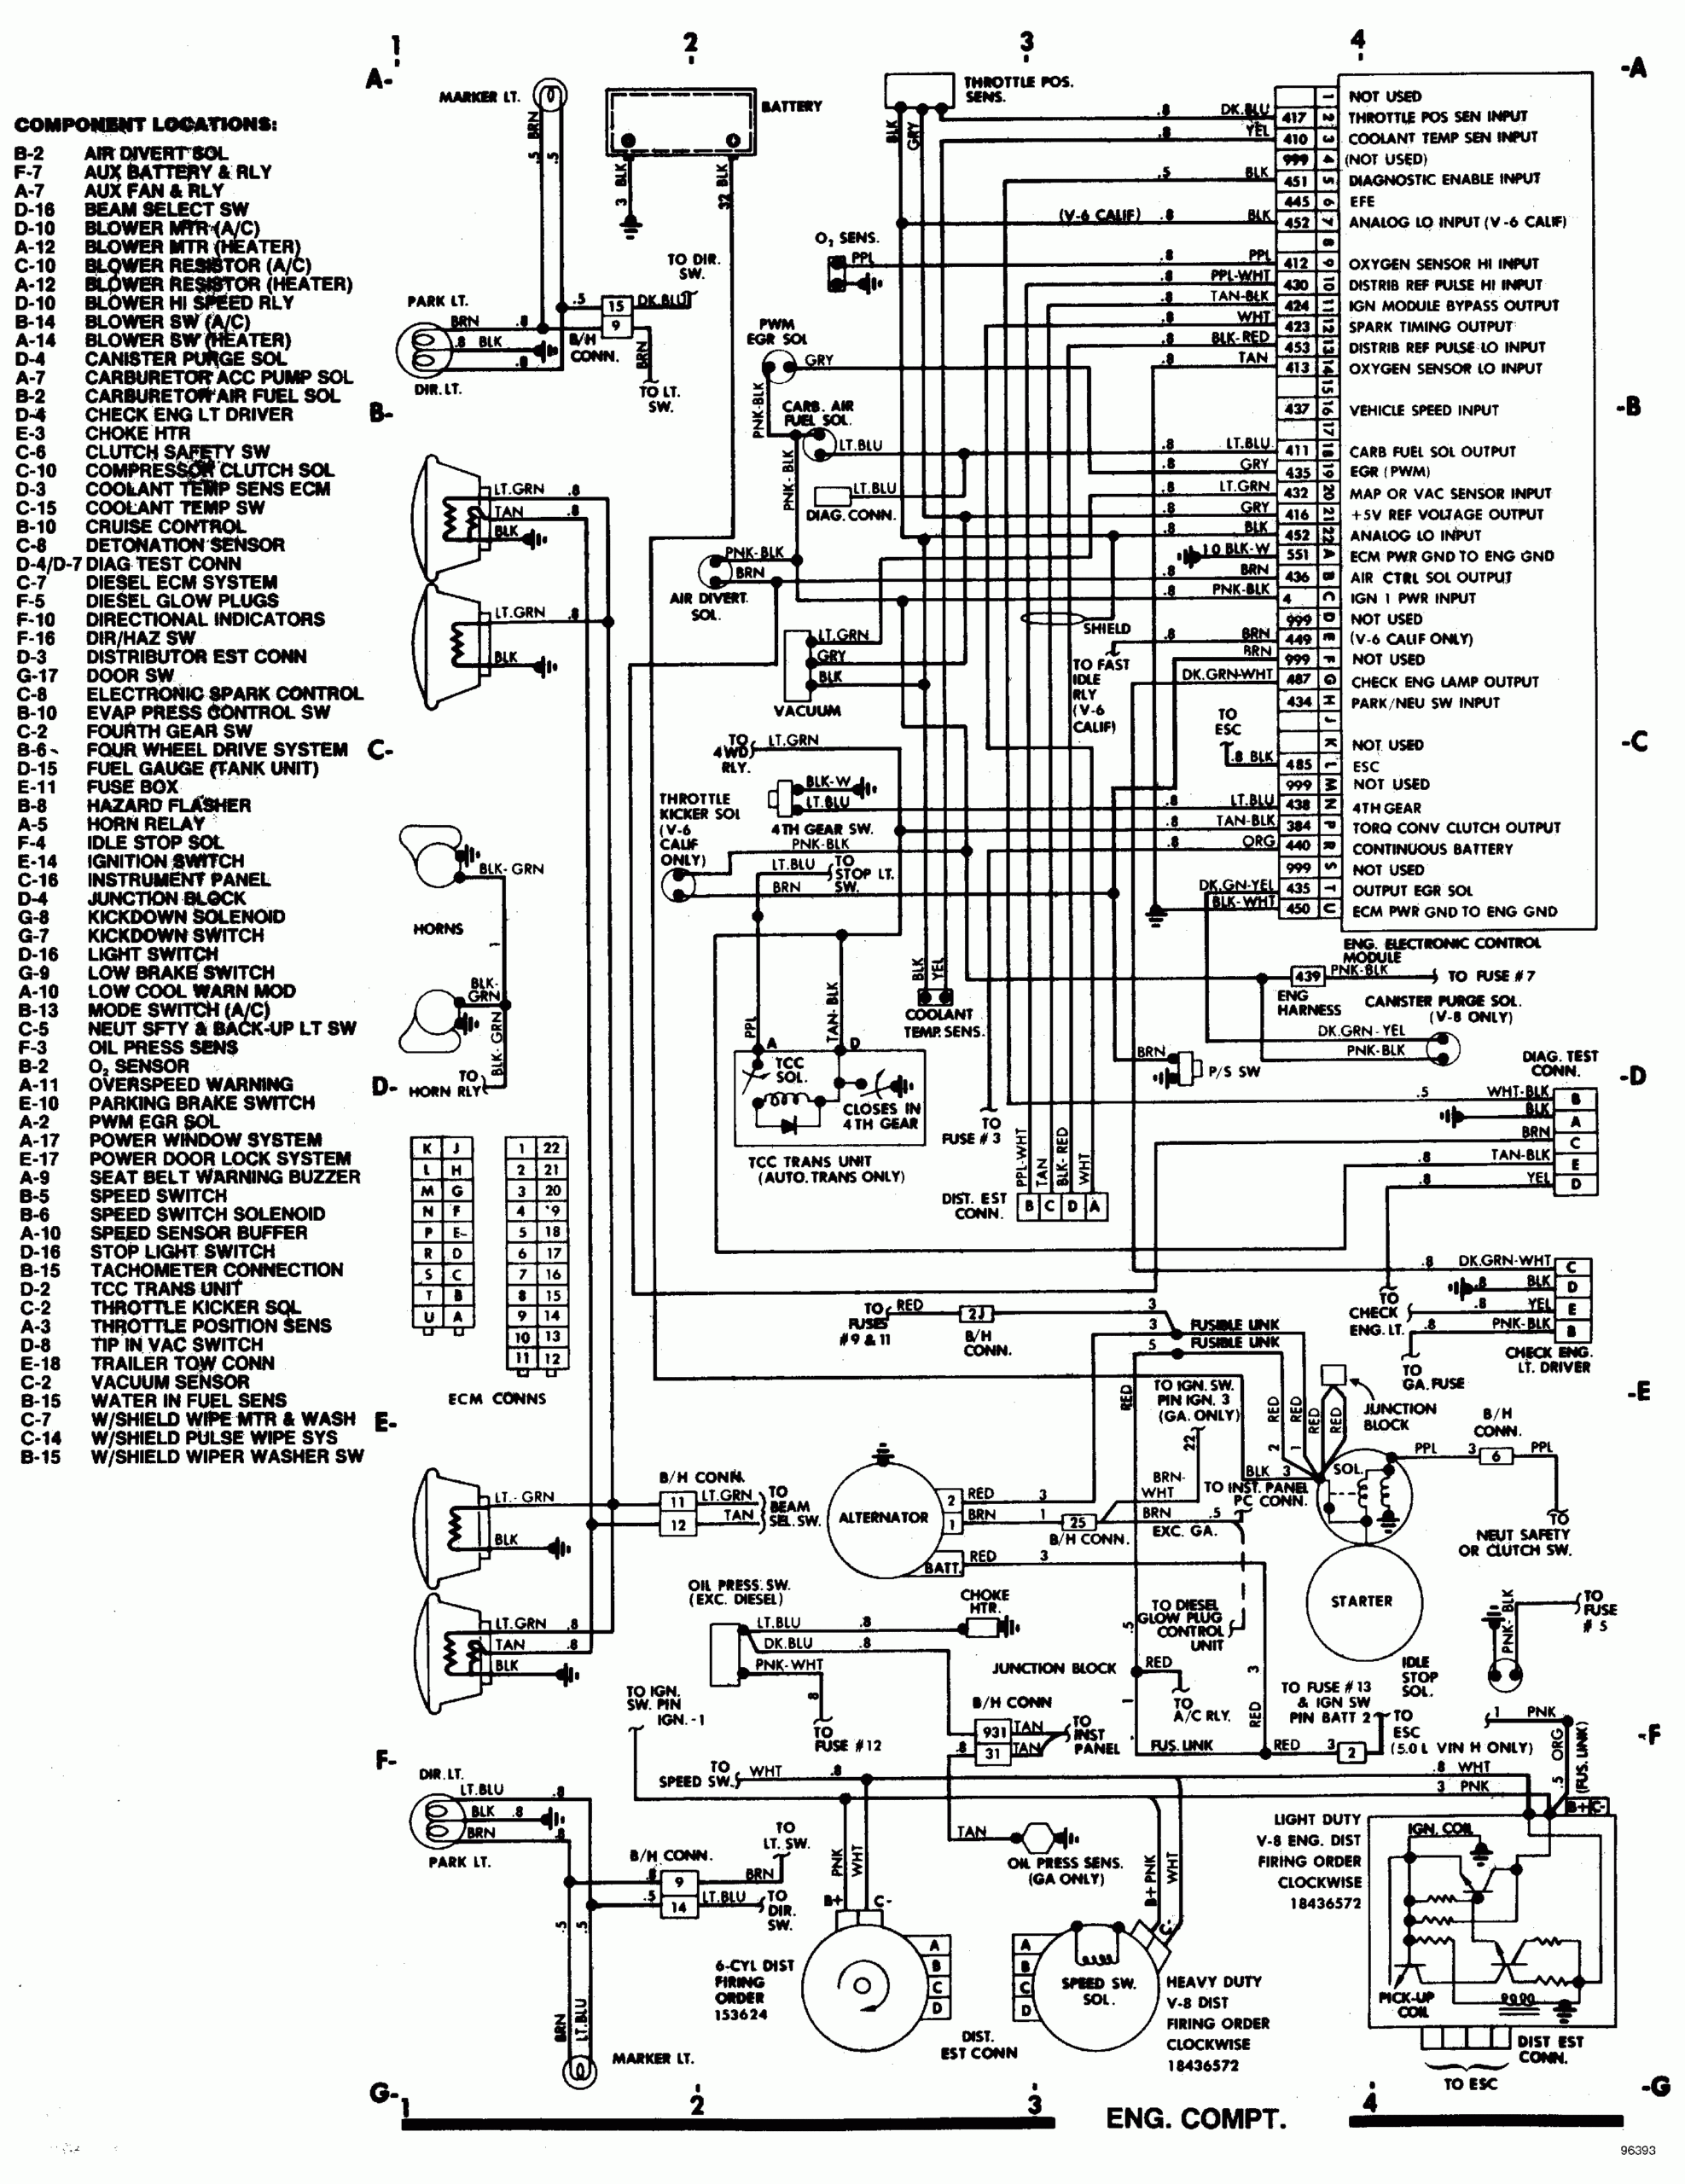 DIAGRAM 1955 Chevy Pickup Radio Wiring Diagram FULL Version HD